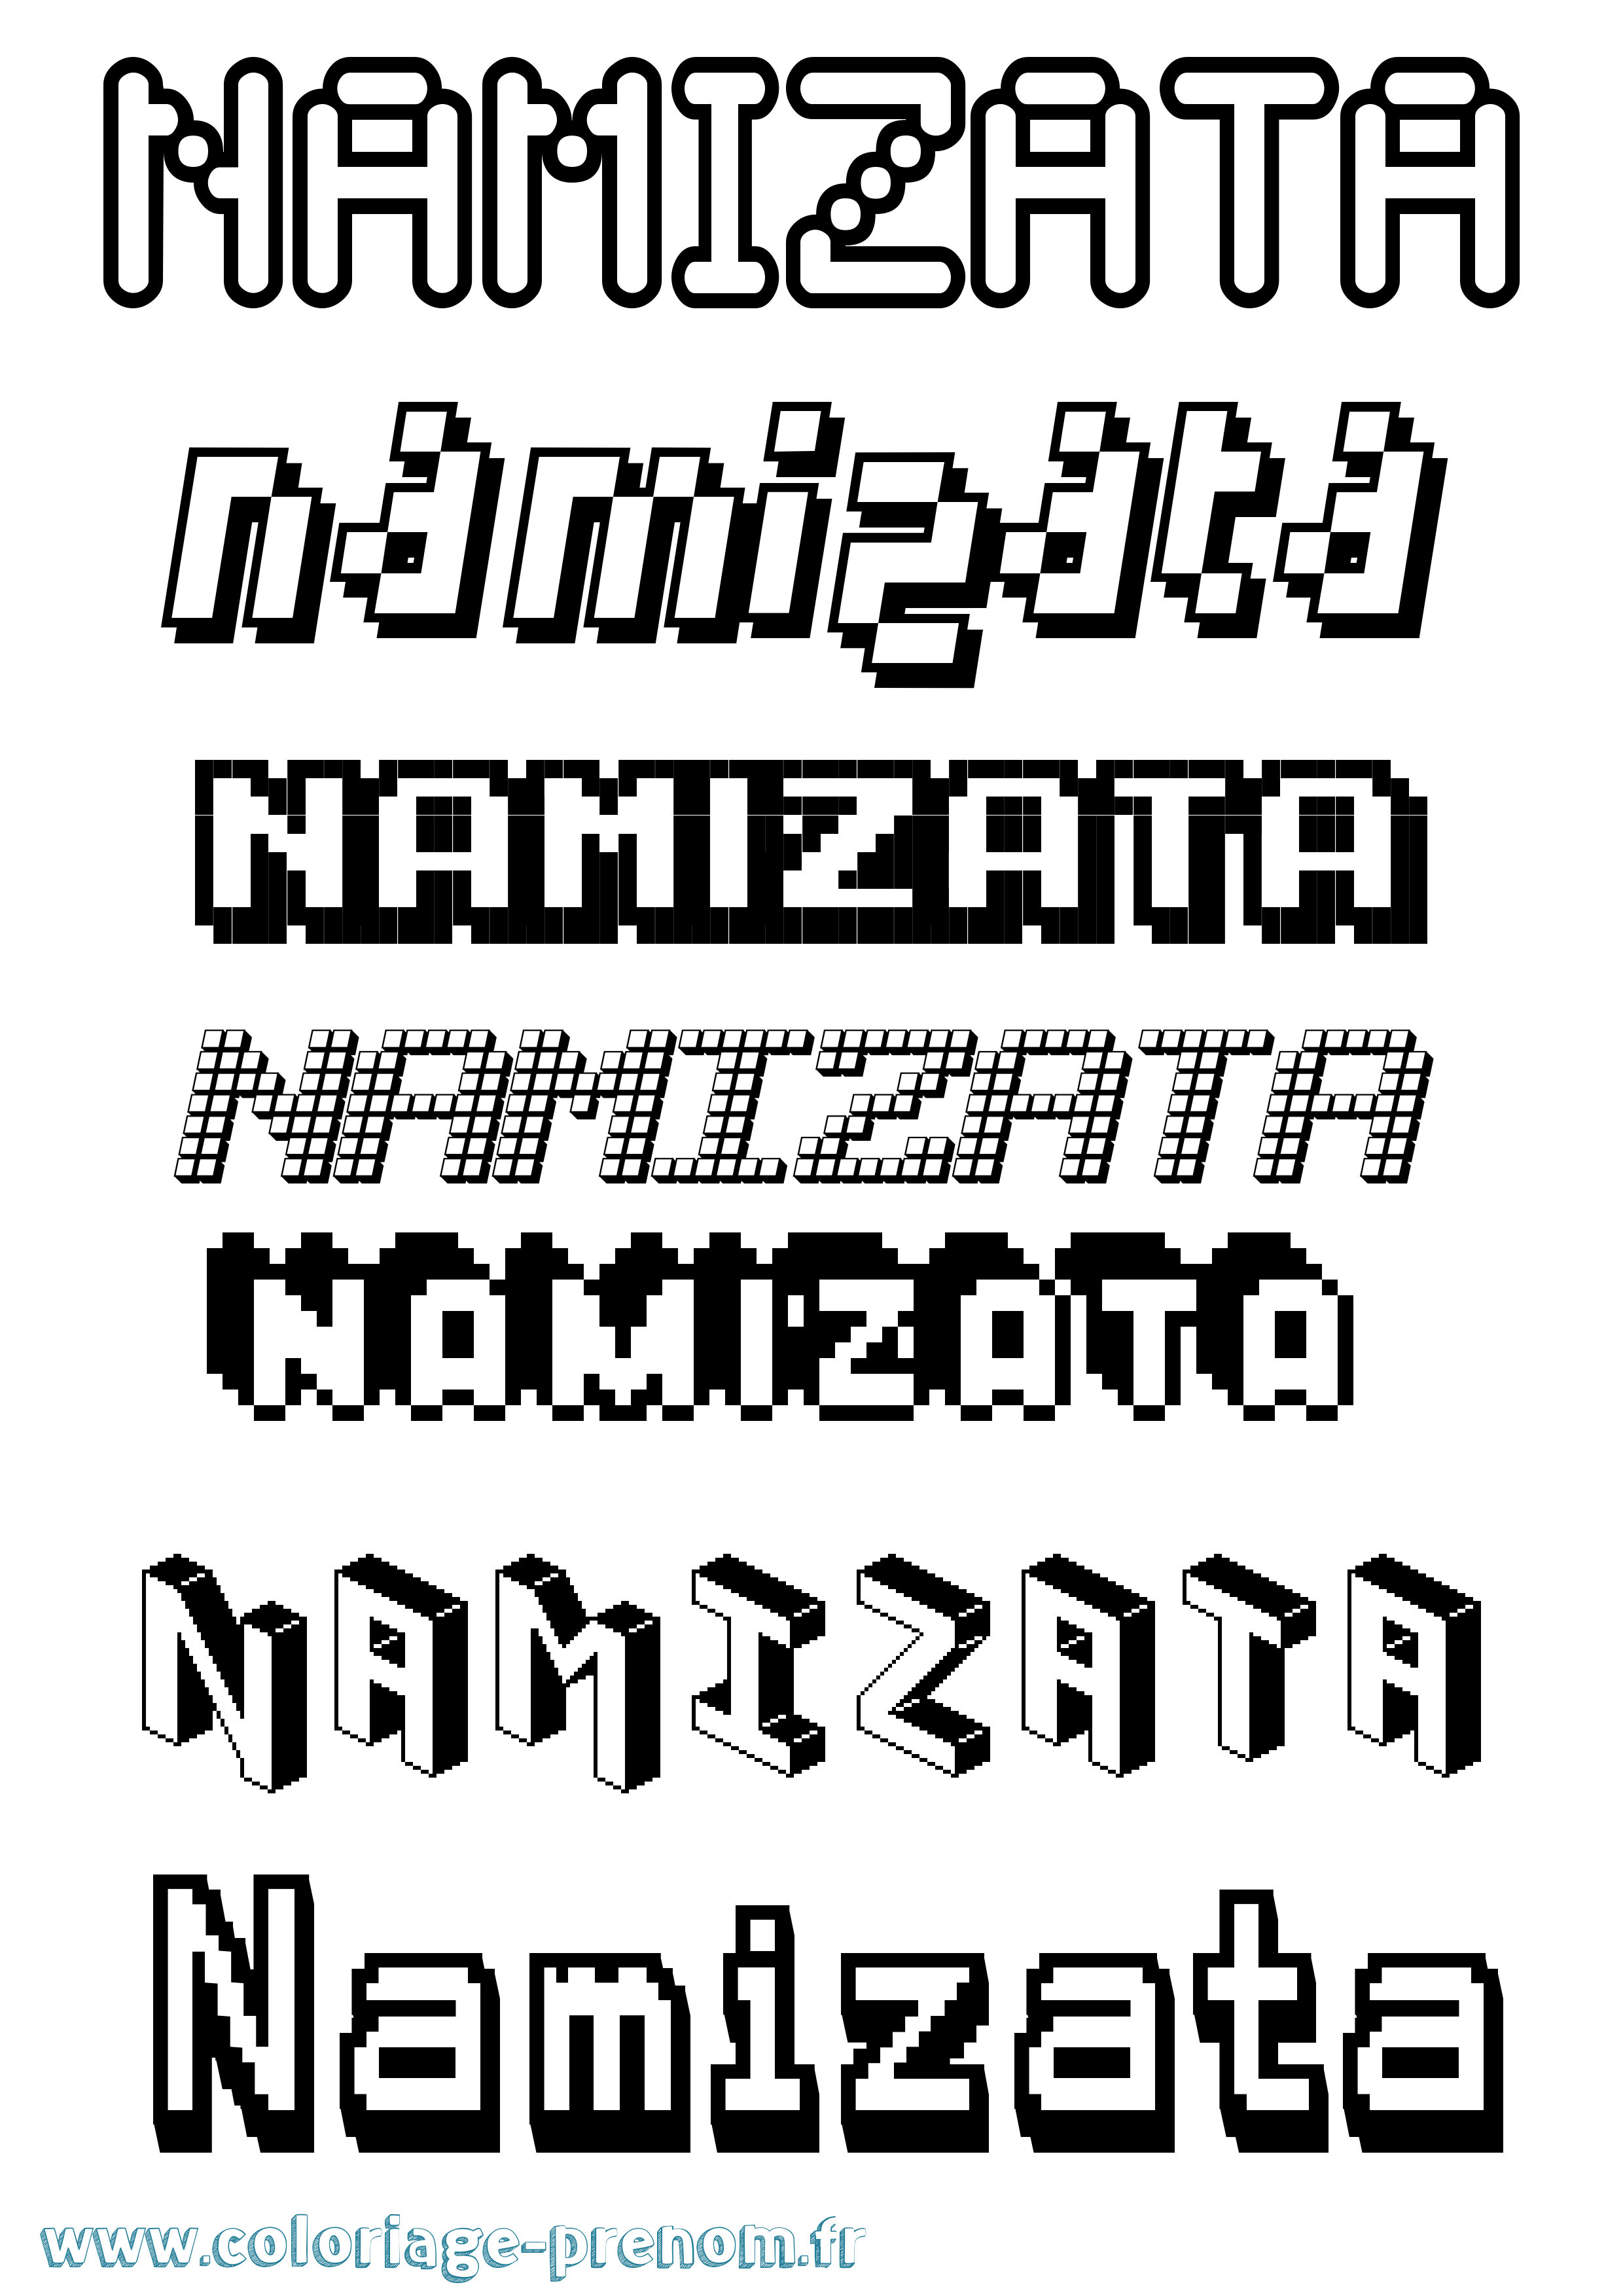 Coloriage prénom Namizata Pixel